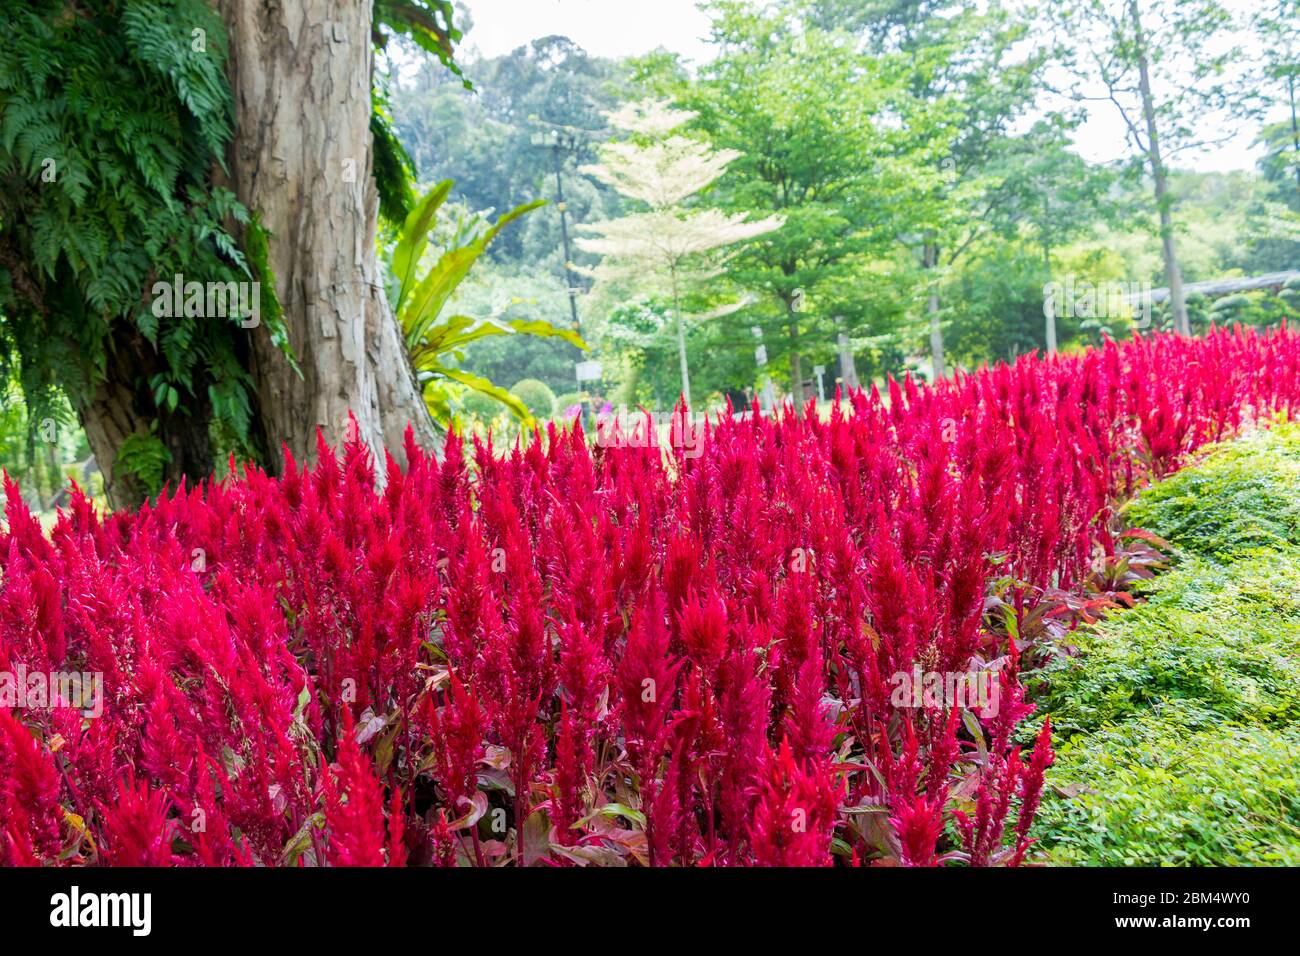 Bright Pink Red Plants Flowers And Huge Park Tree Perdana Lake Gardens Malaysia Stock Photo Alamy